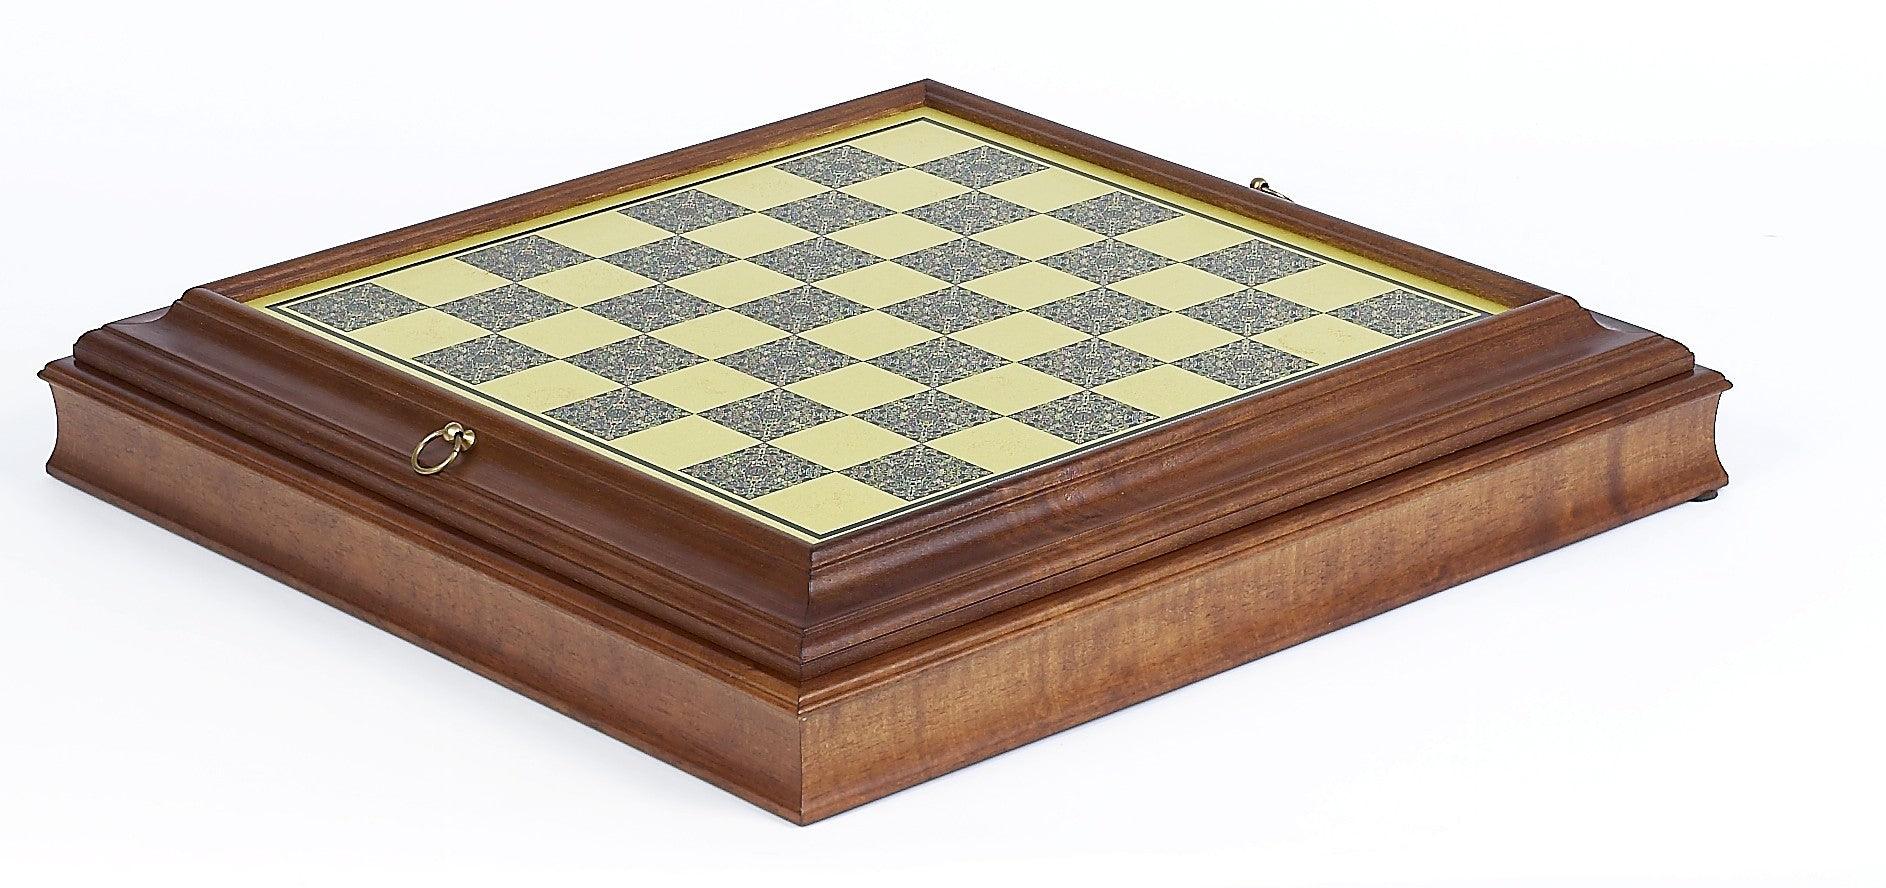 22 inch Brass Cabinet Chess Board side